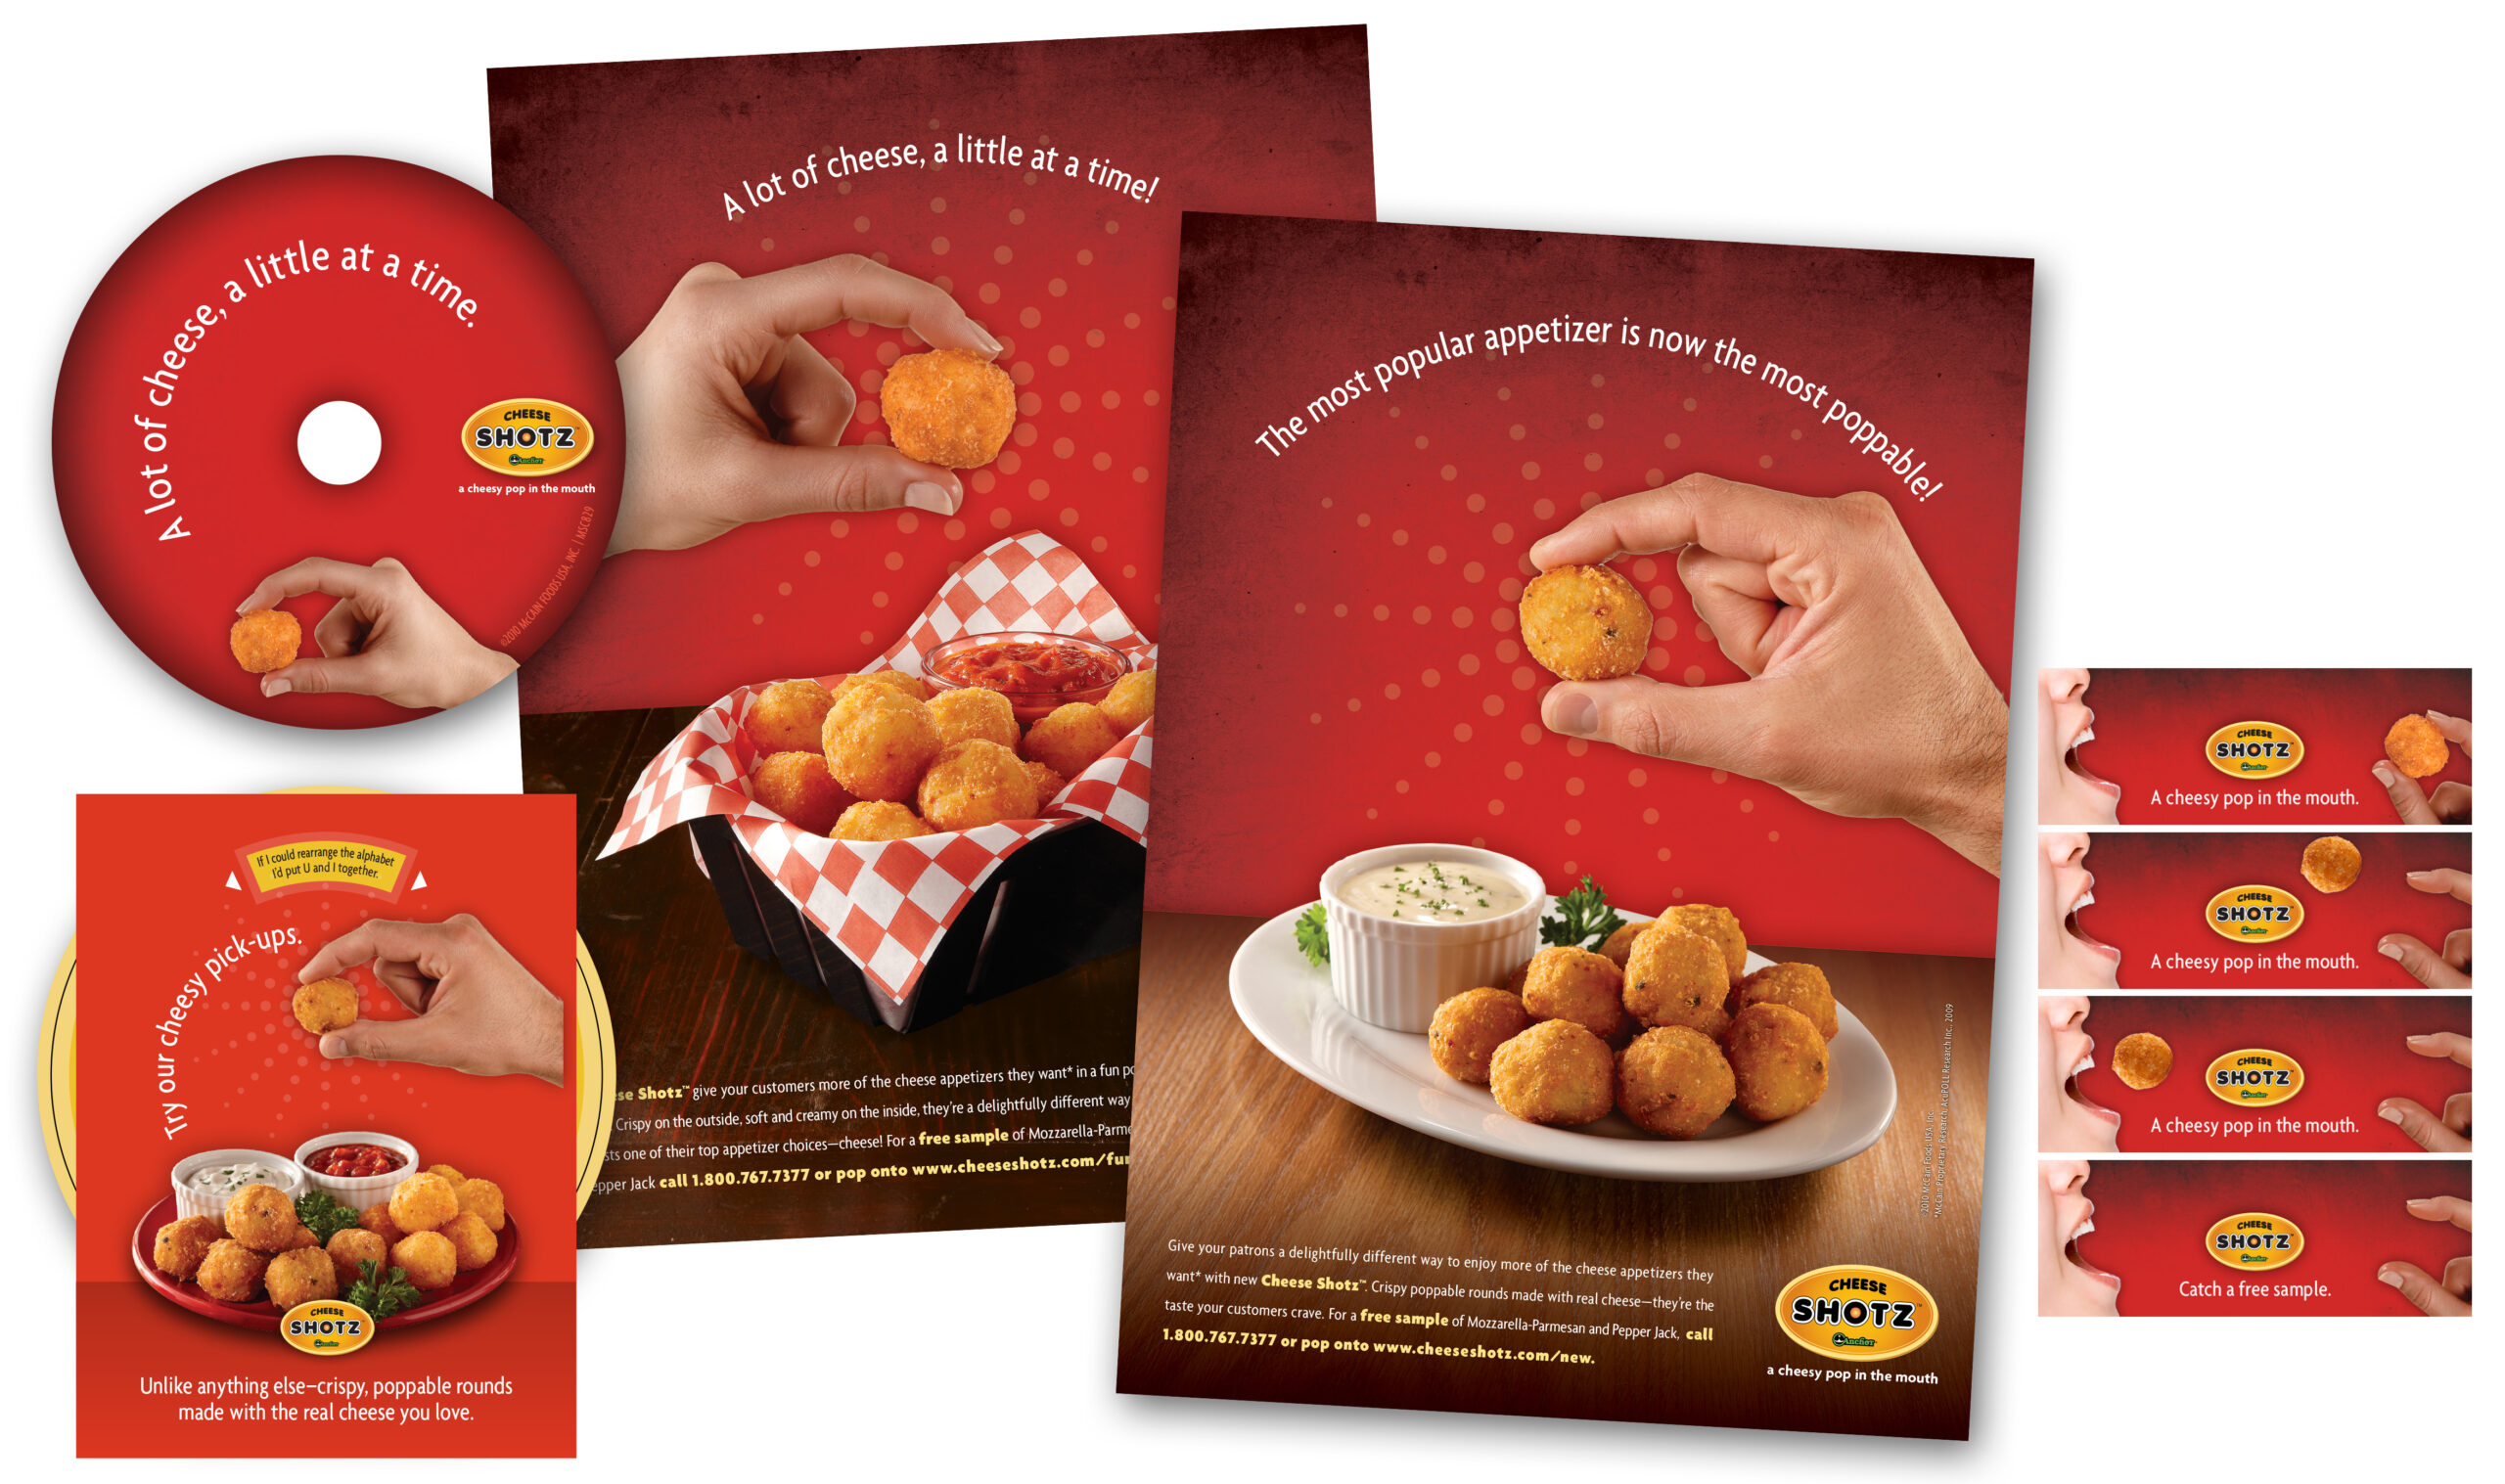 Cheese Shotz promotional materials